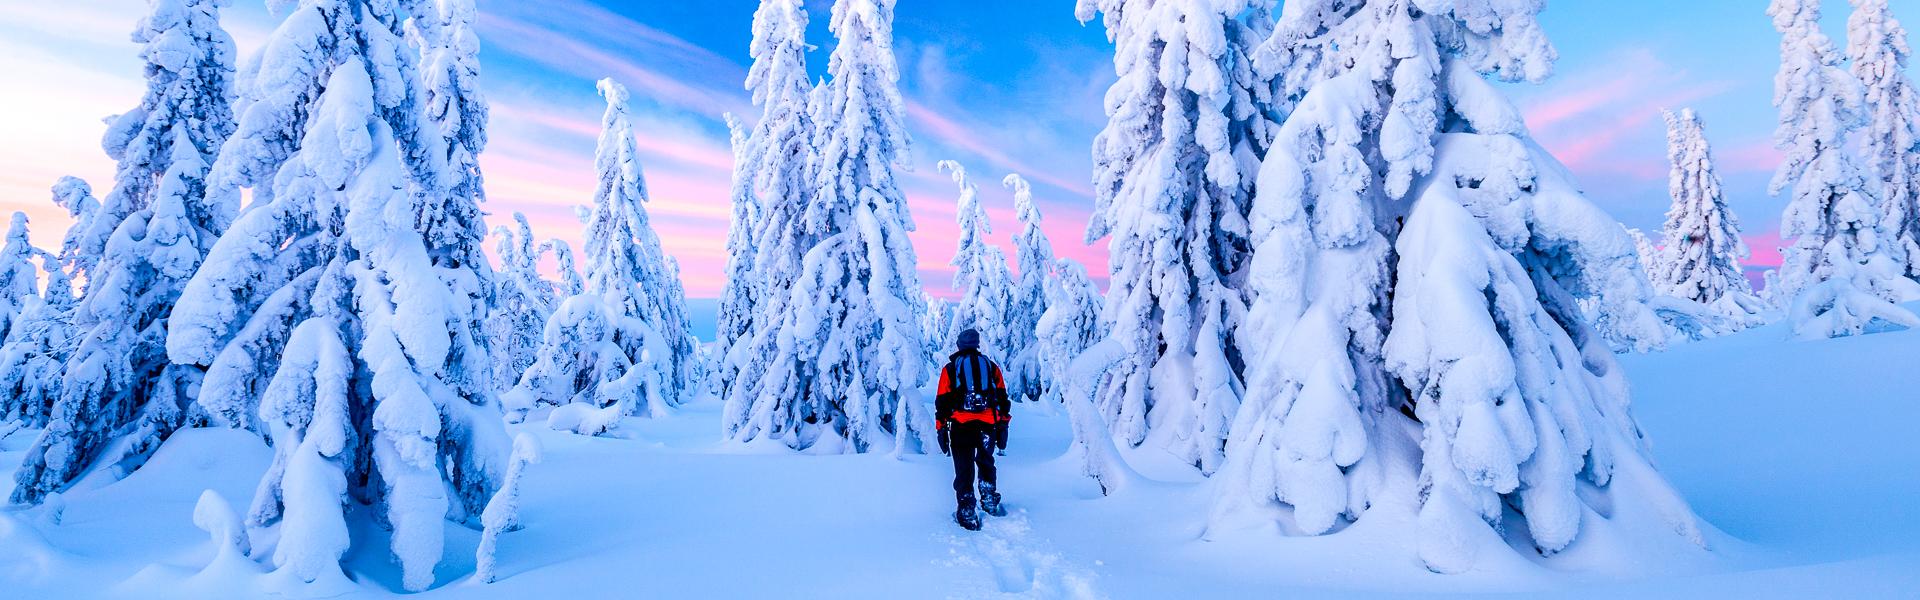 Traumhafte Winterlandschaft in Schweden |  Vidar Molkken, Visit Norway / Chamleon